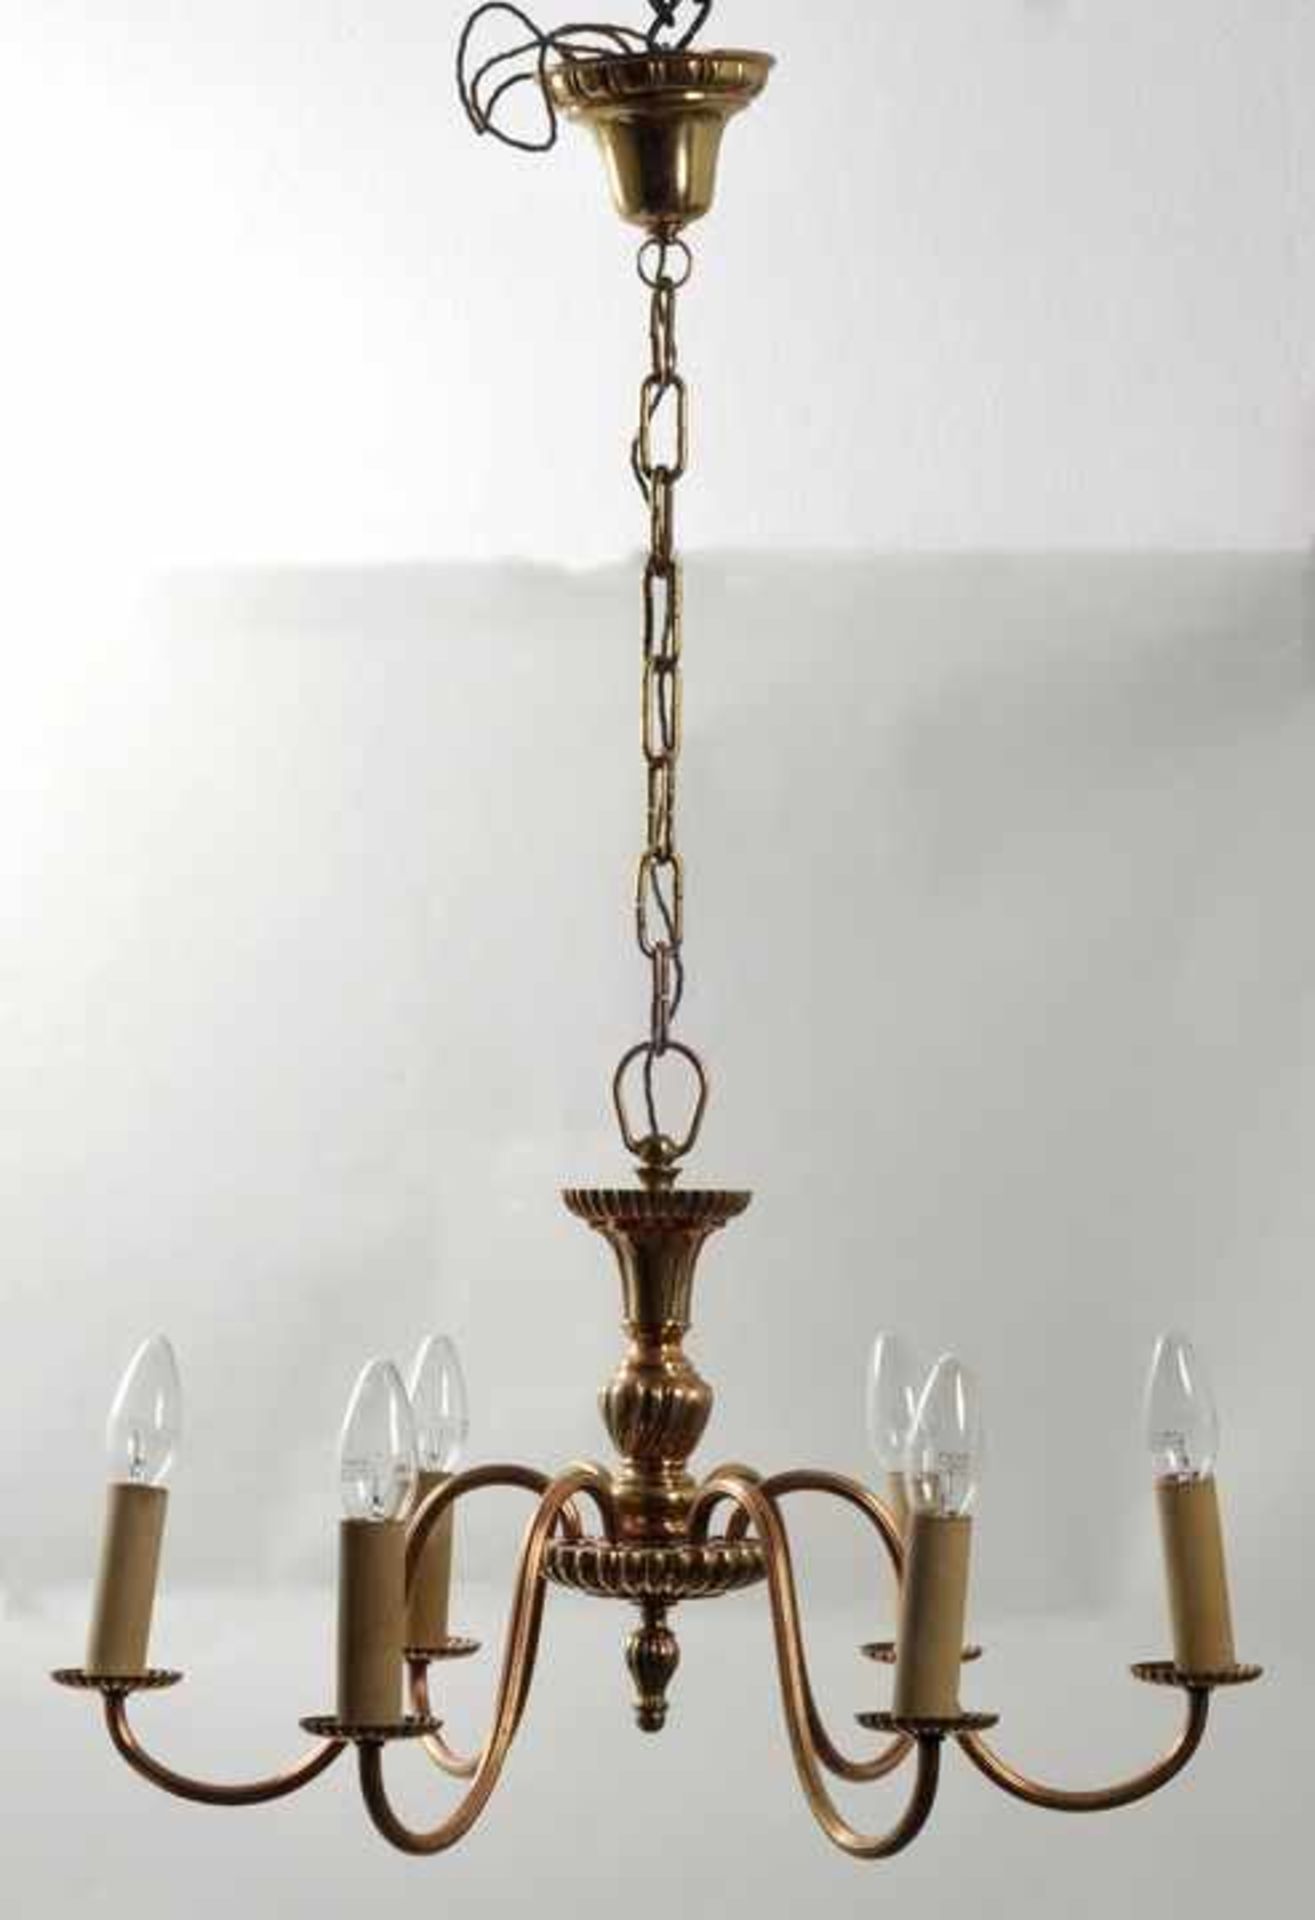 Deckenlampe im flämischen Stil, 1. H. 20. Jh.Metall (Messing), sechs s-förmig geschweifte Arme an - Bild 2 aus 2